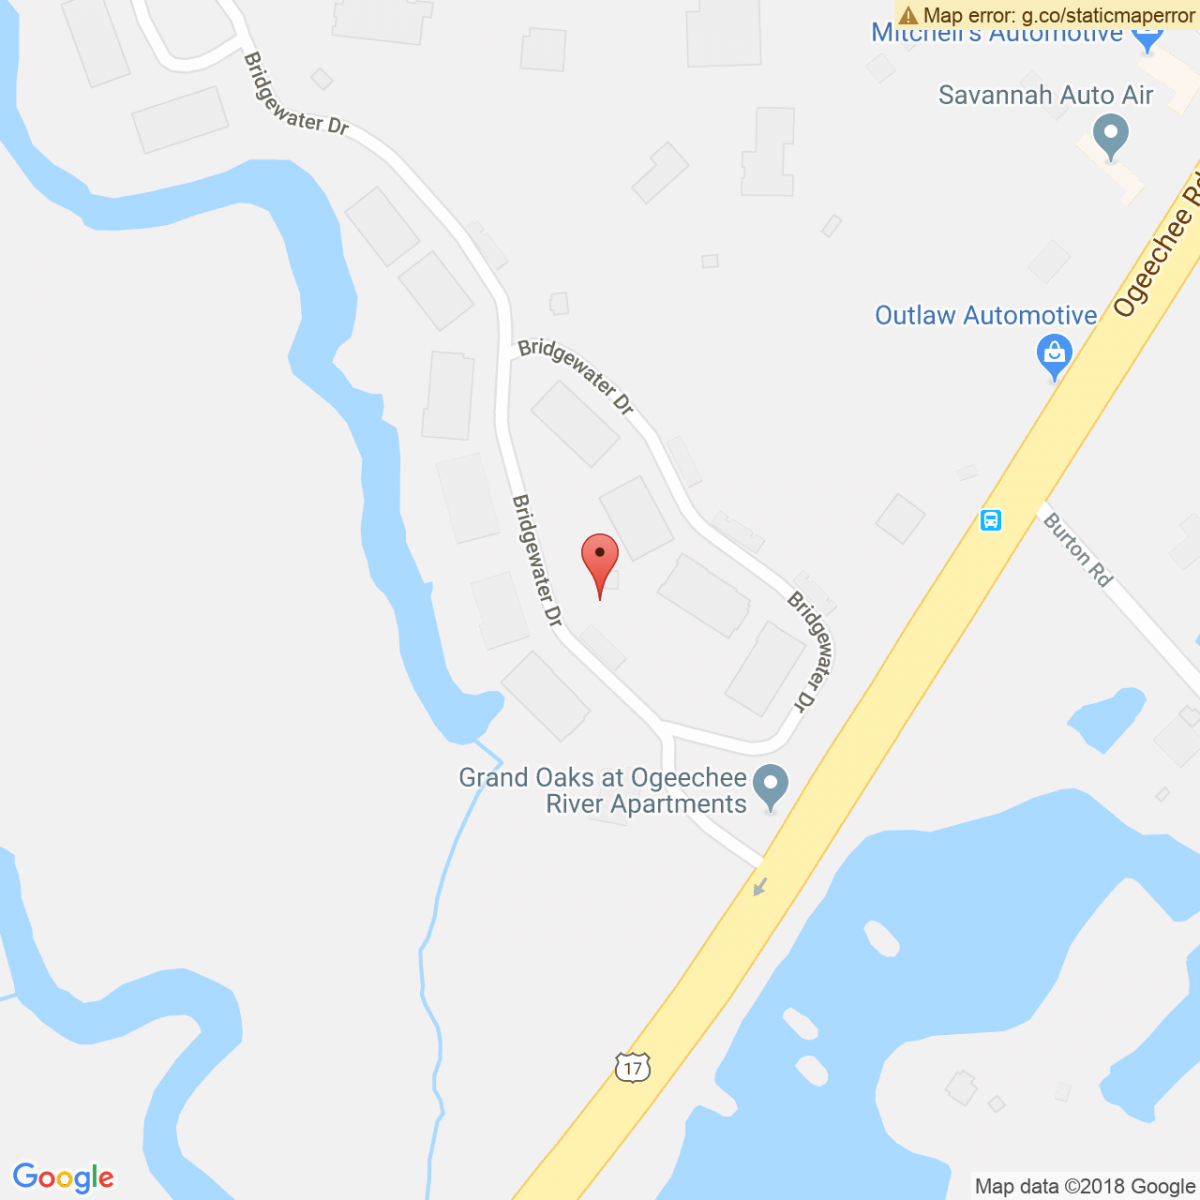 Grand Oaks location pinned on Apple Maps